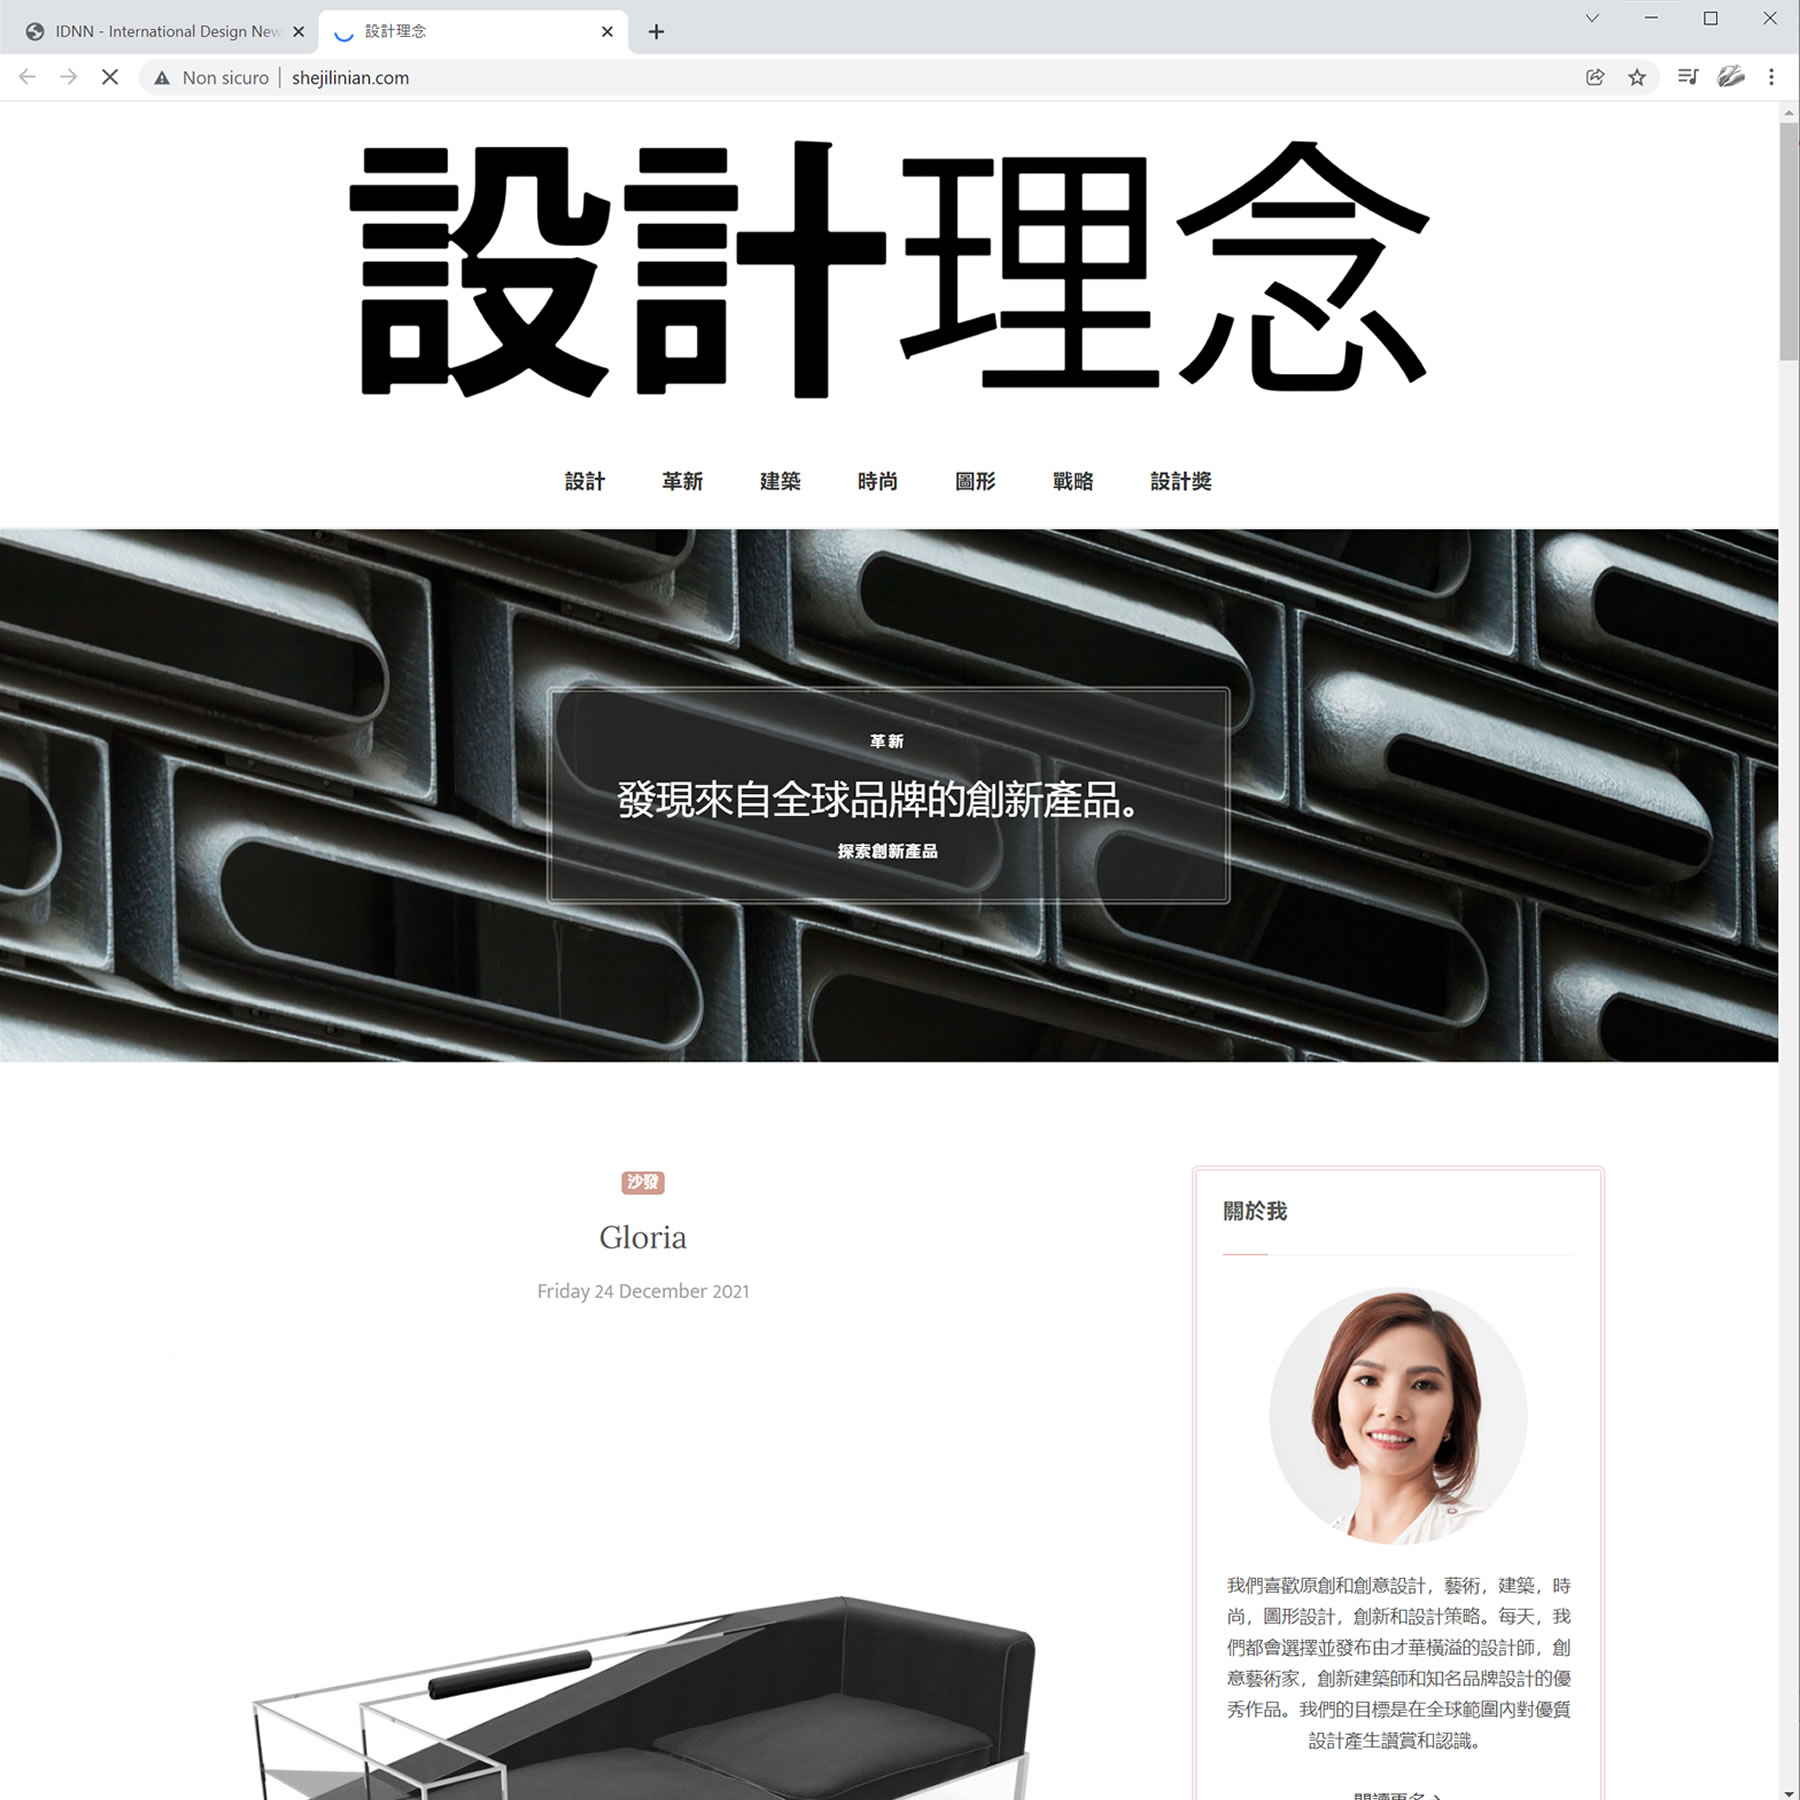 design news website